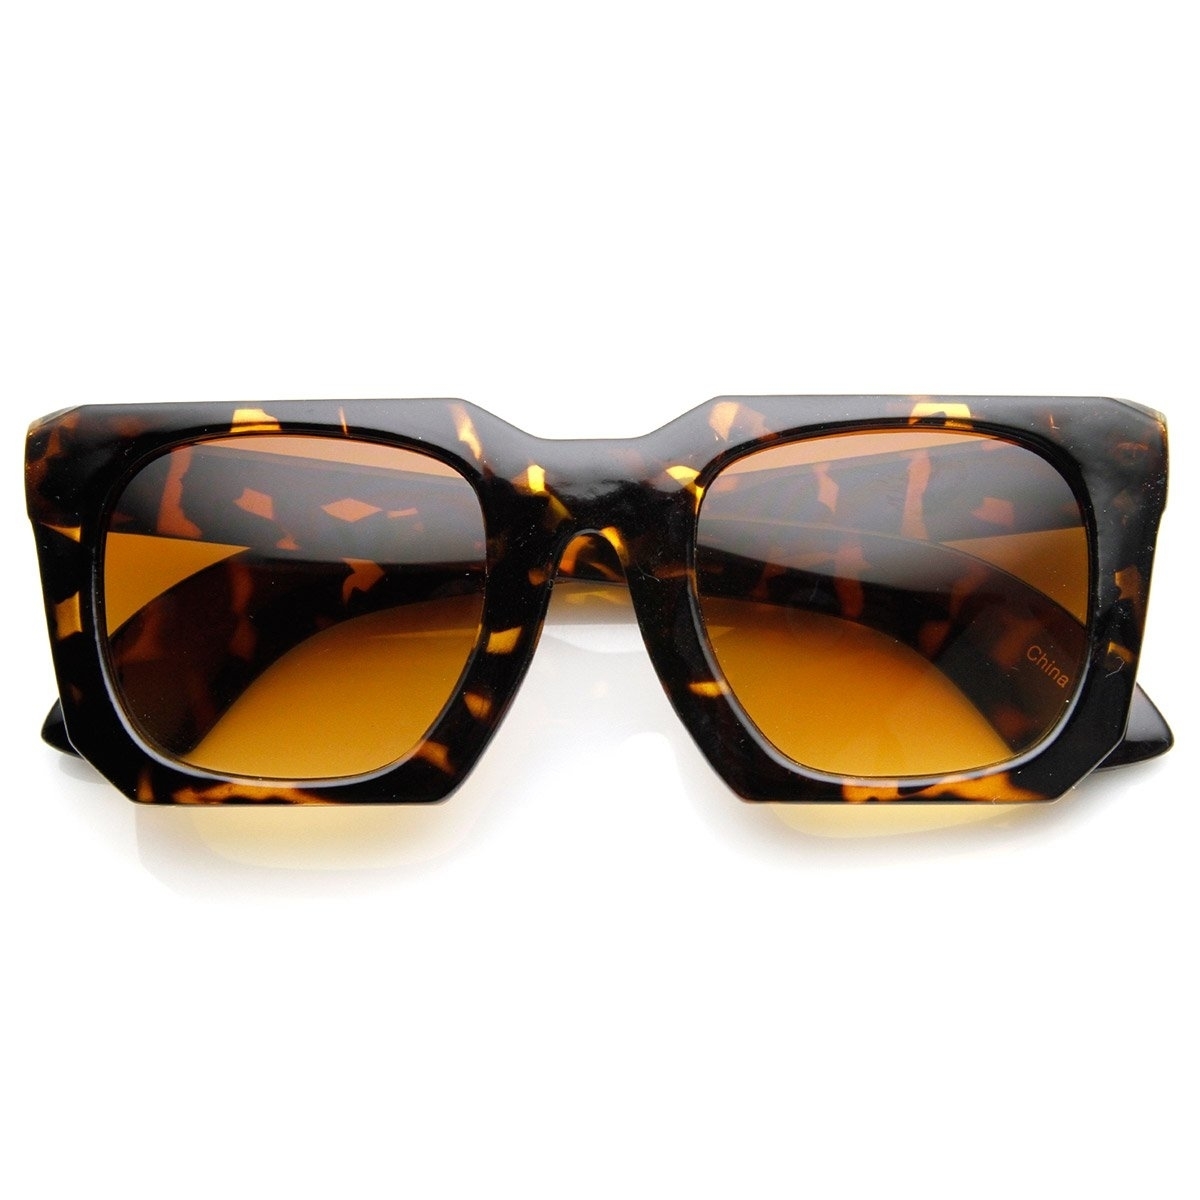 Bold Square Angled Frame Mod Horn Rimmed Sunglasses - Tortoise Brown